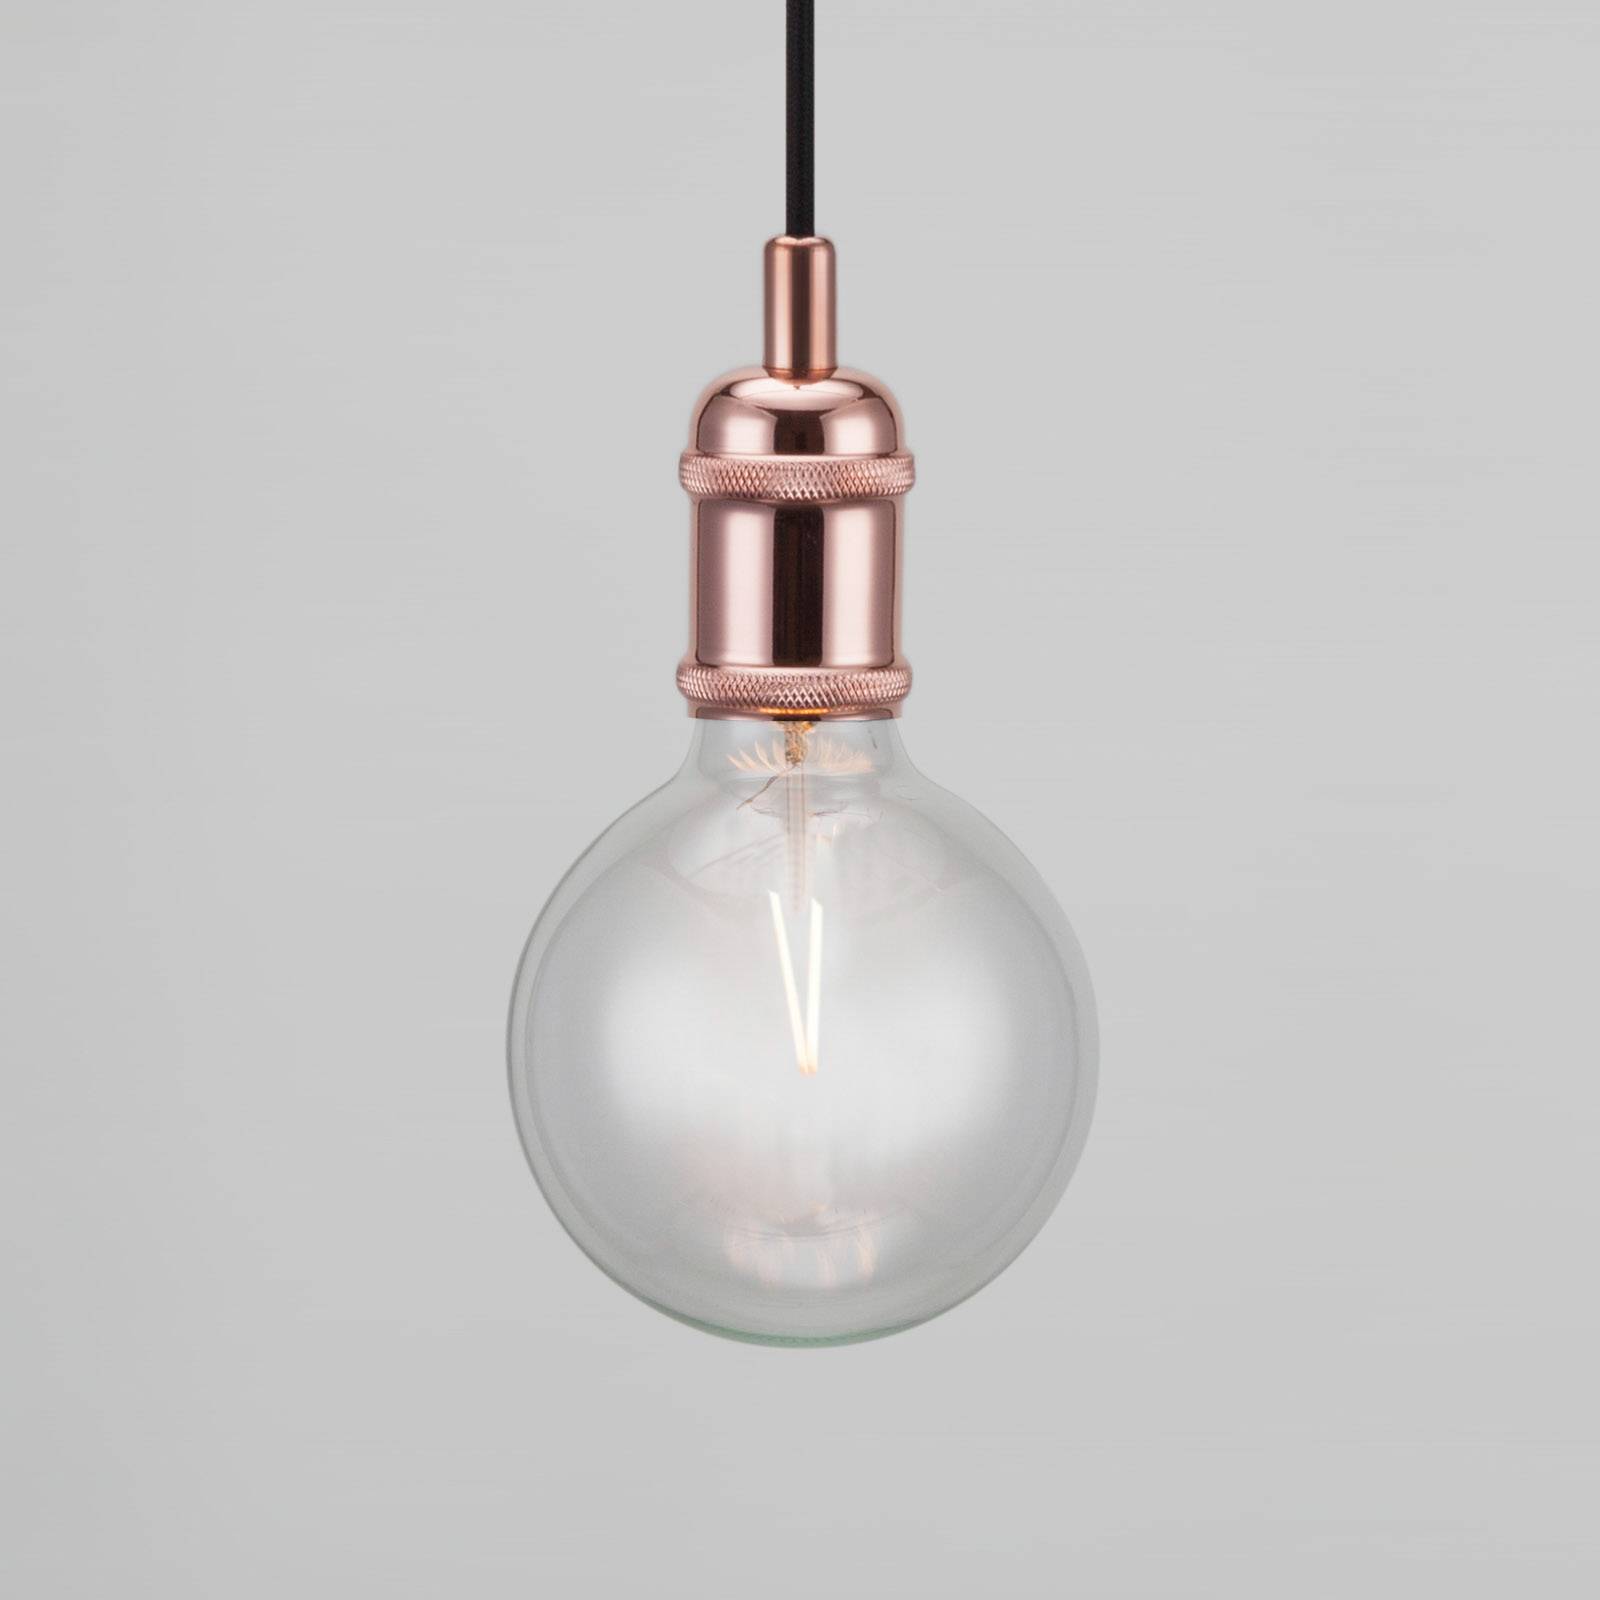 Avra - minimalista függő lámpa réz